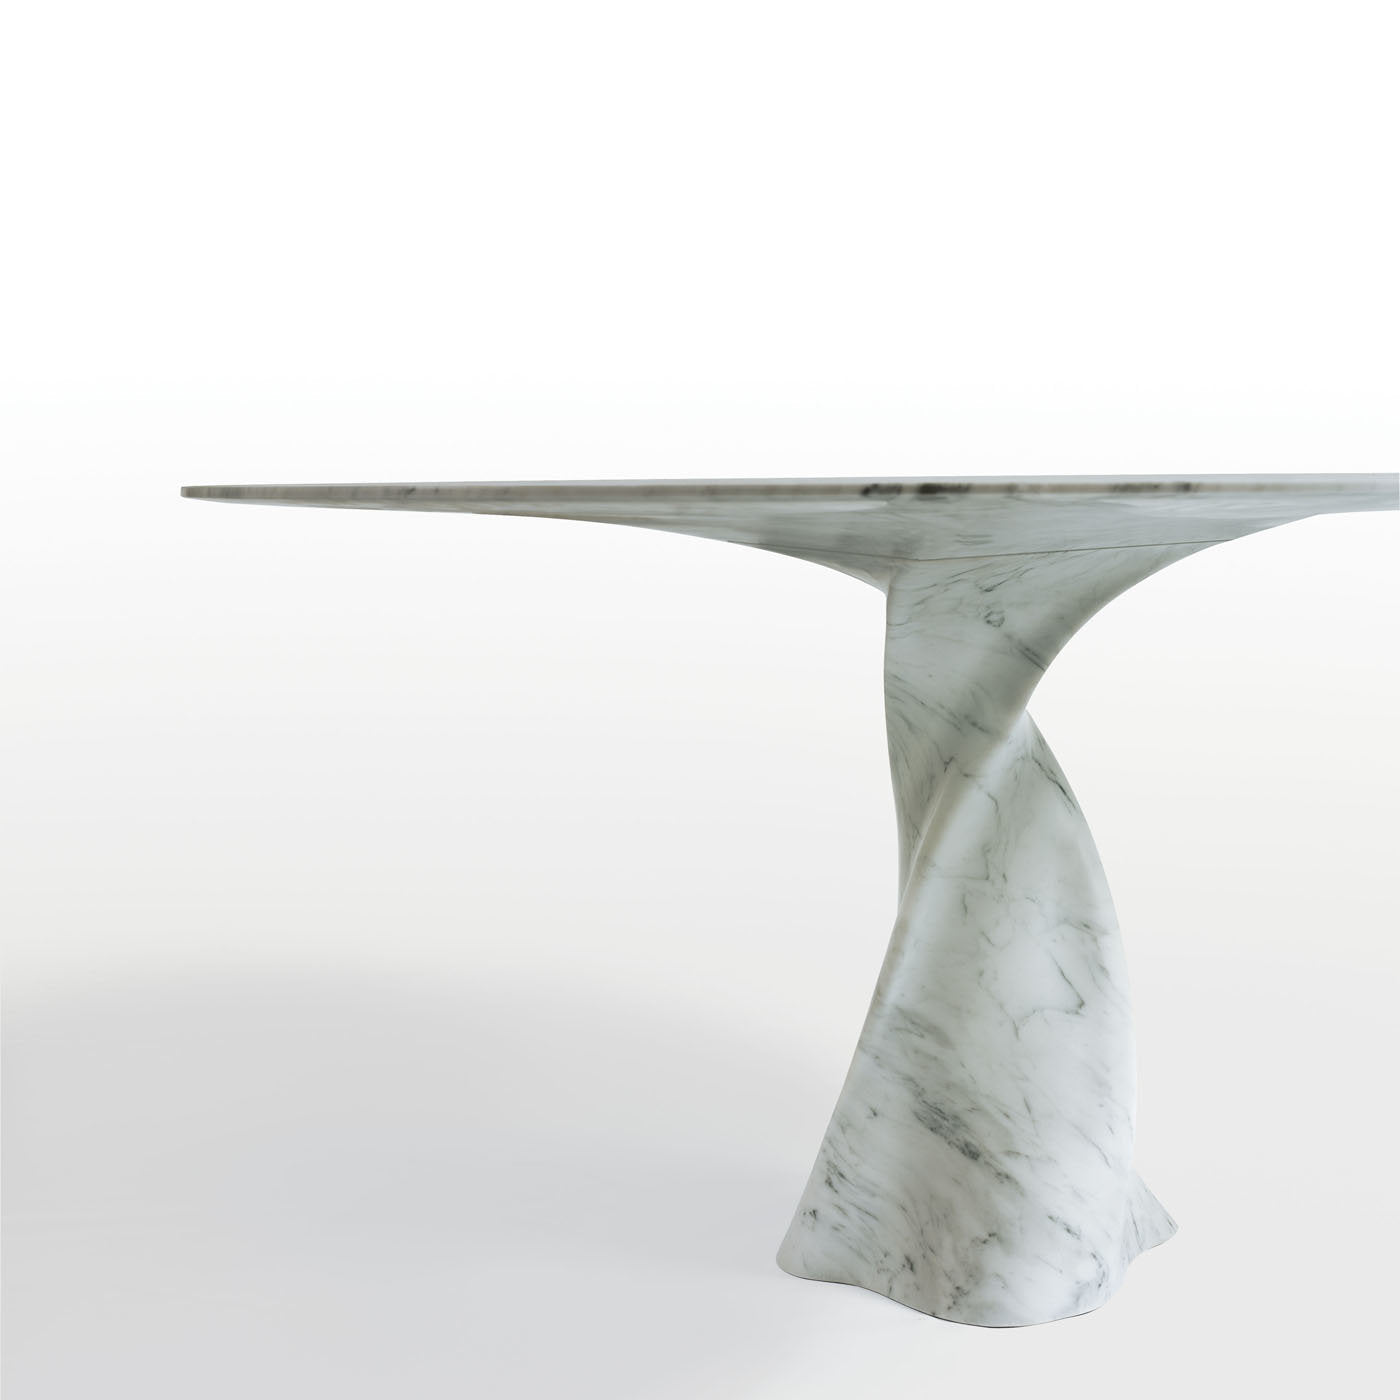 Twist Table in White Carrara Marble by Giuseppe Chigiotti - Alternative view 1